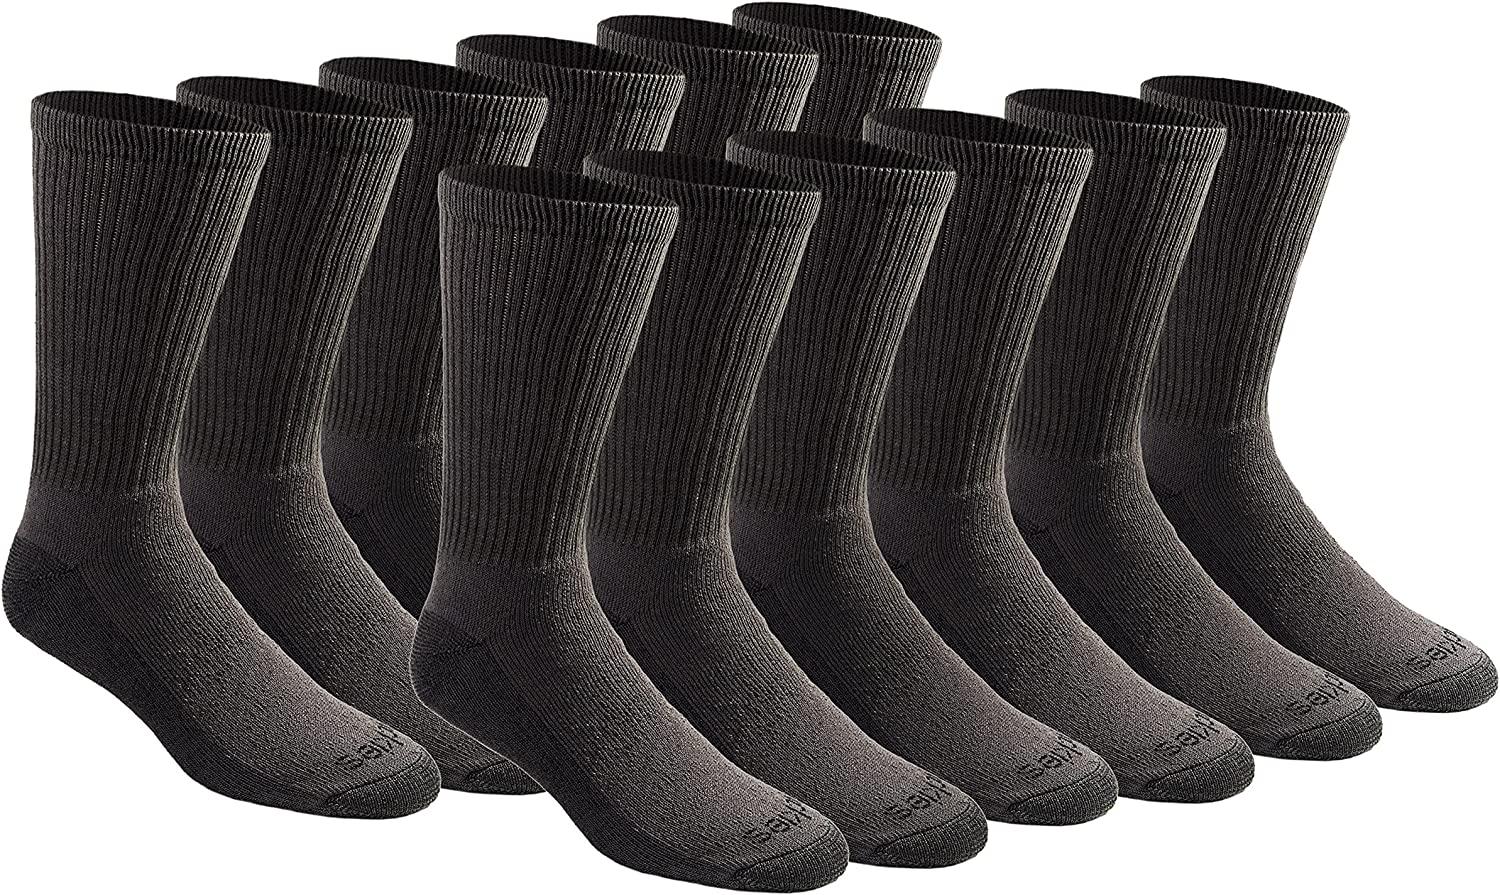 Dickies Mens Dri-tech Moisture Control Crew Socks 12 Pack for $12.99